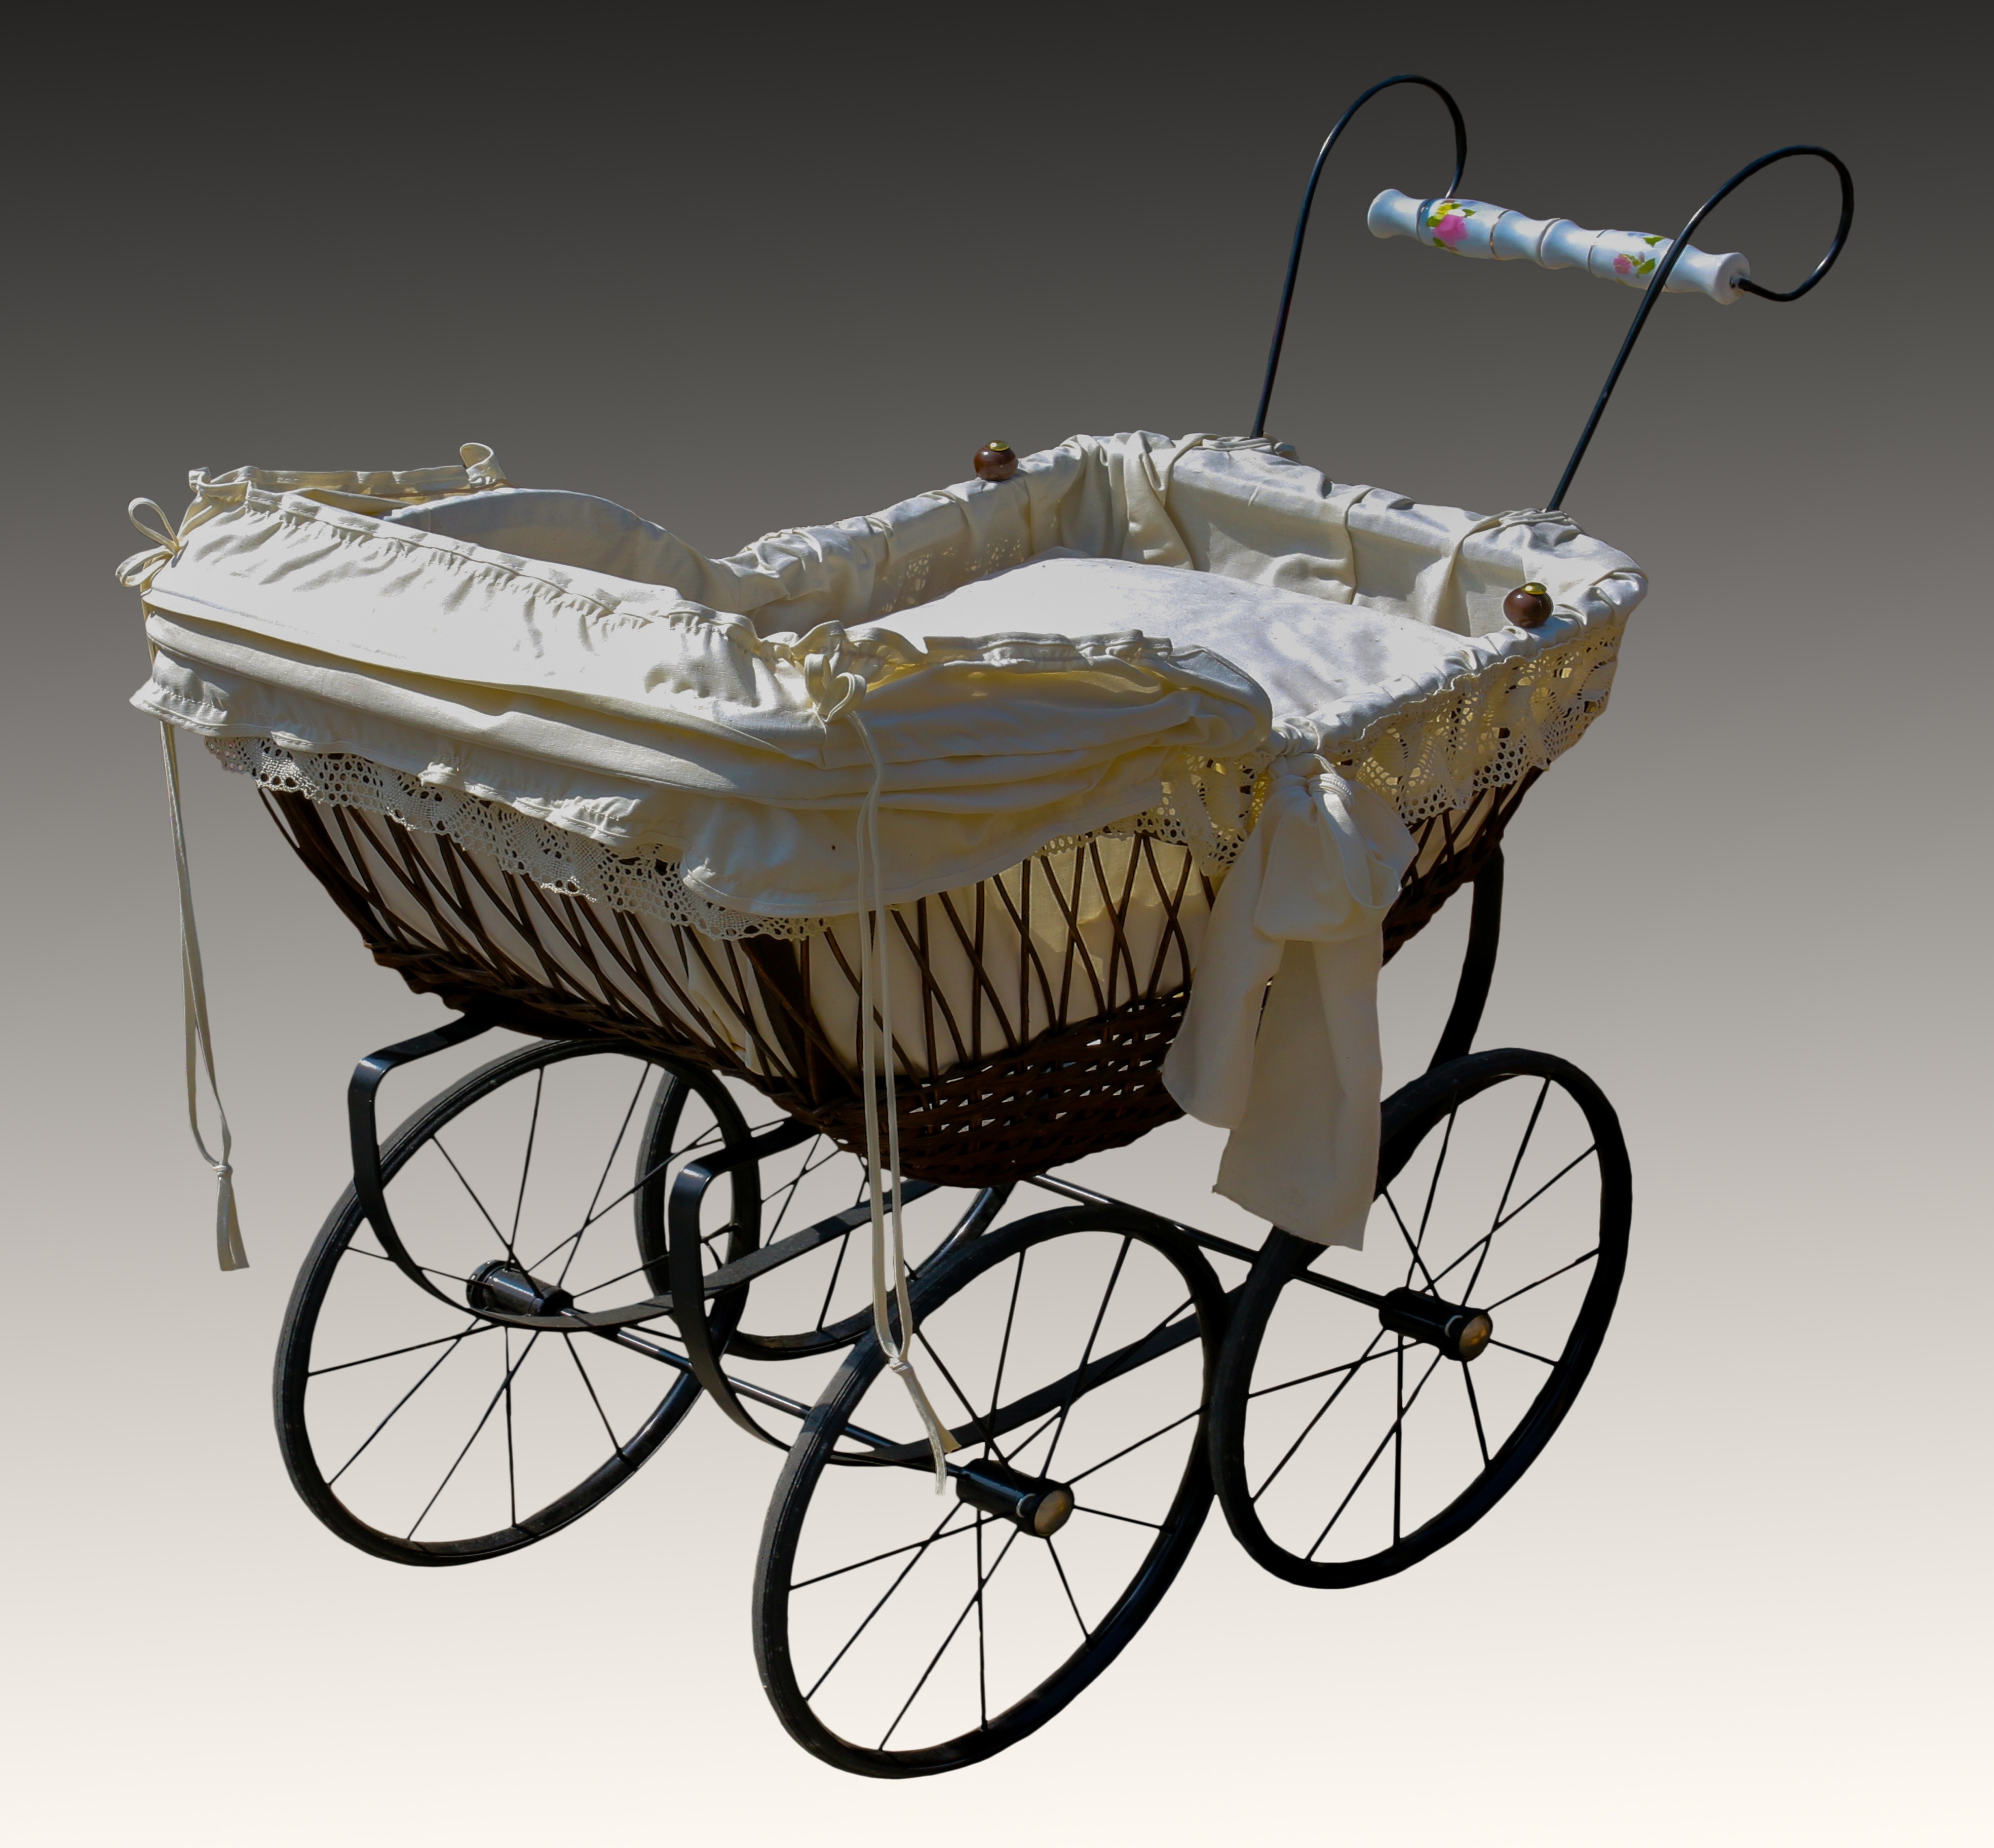 Baby Carriage, Old, Nostalgia, Nostalgic, bicycle, food